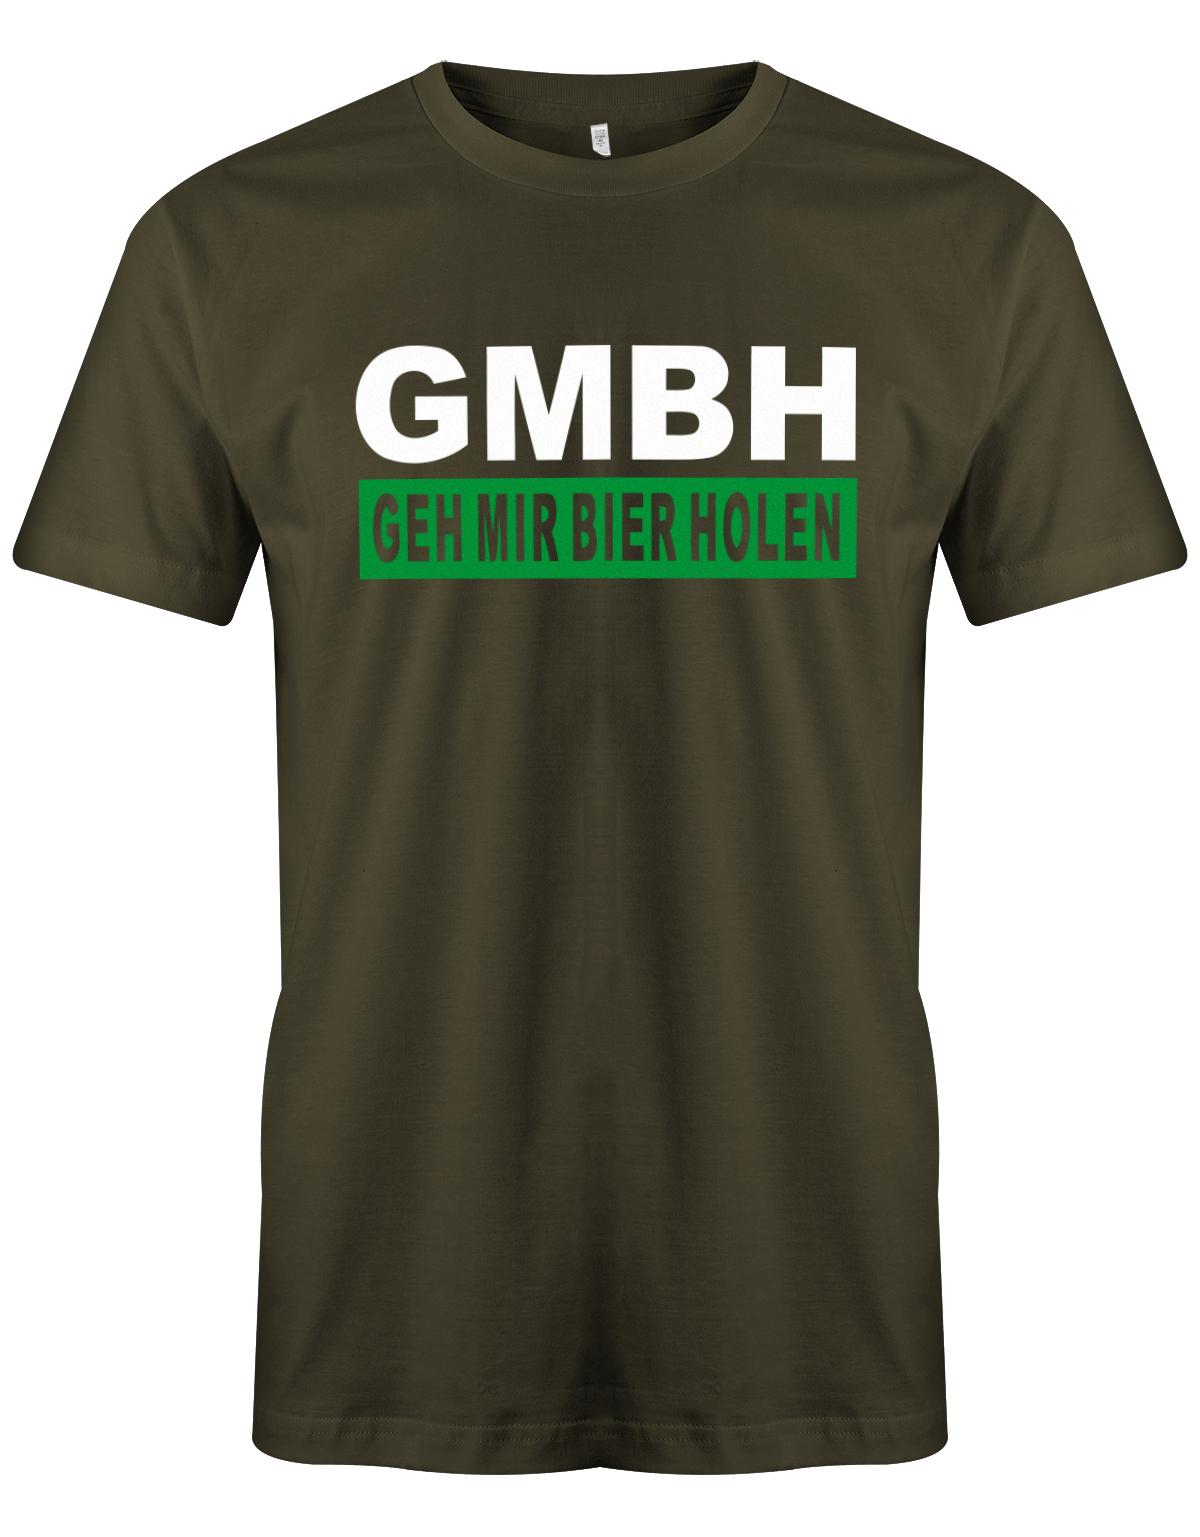 GMBH-Geh-MIR-BIER-Holen-Herren-Bier-Shirt-Army